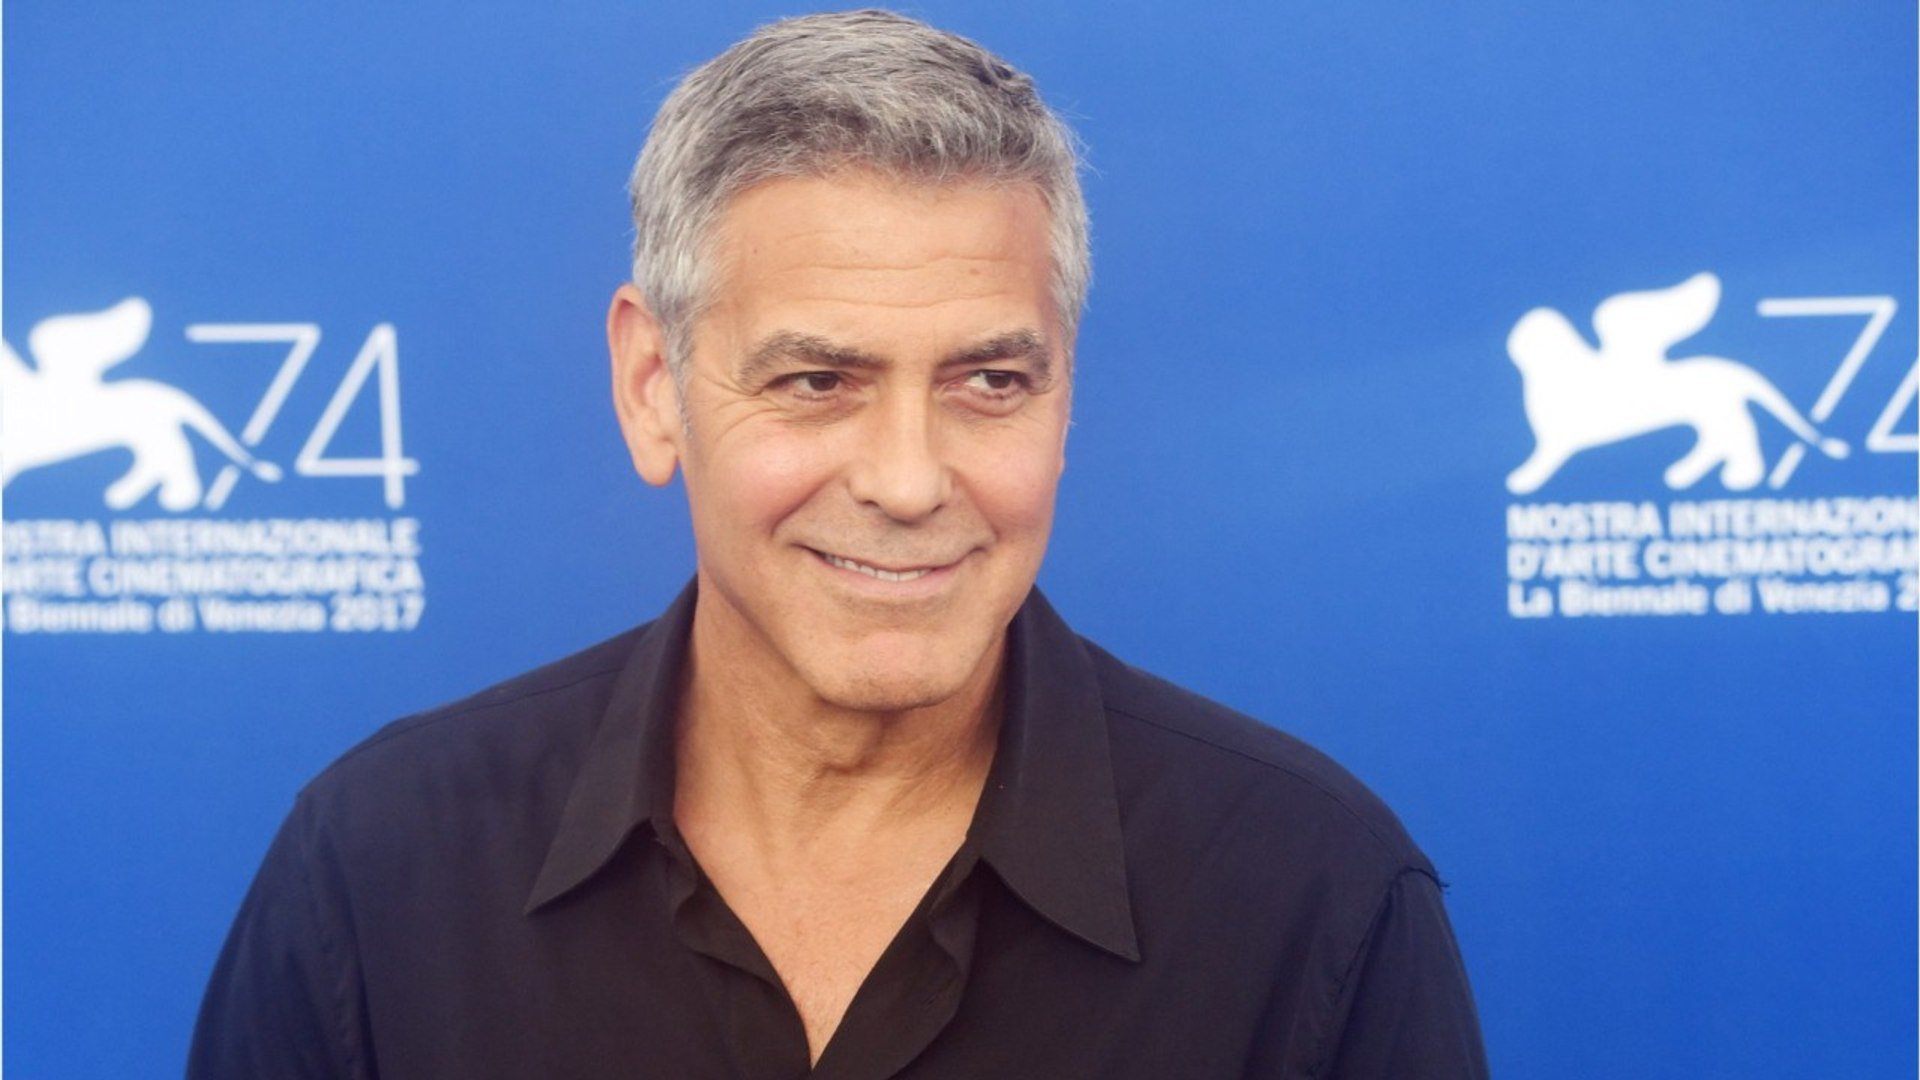 6.George Clooney's Watergate